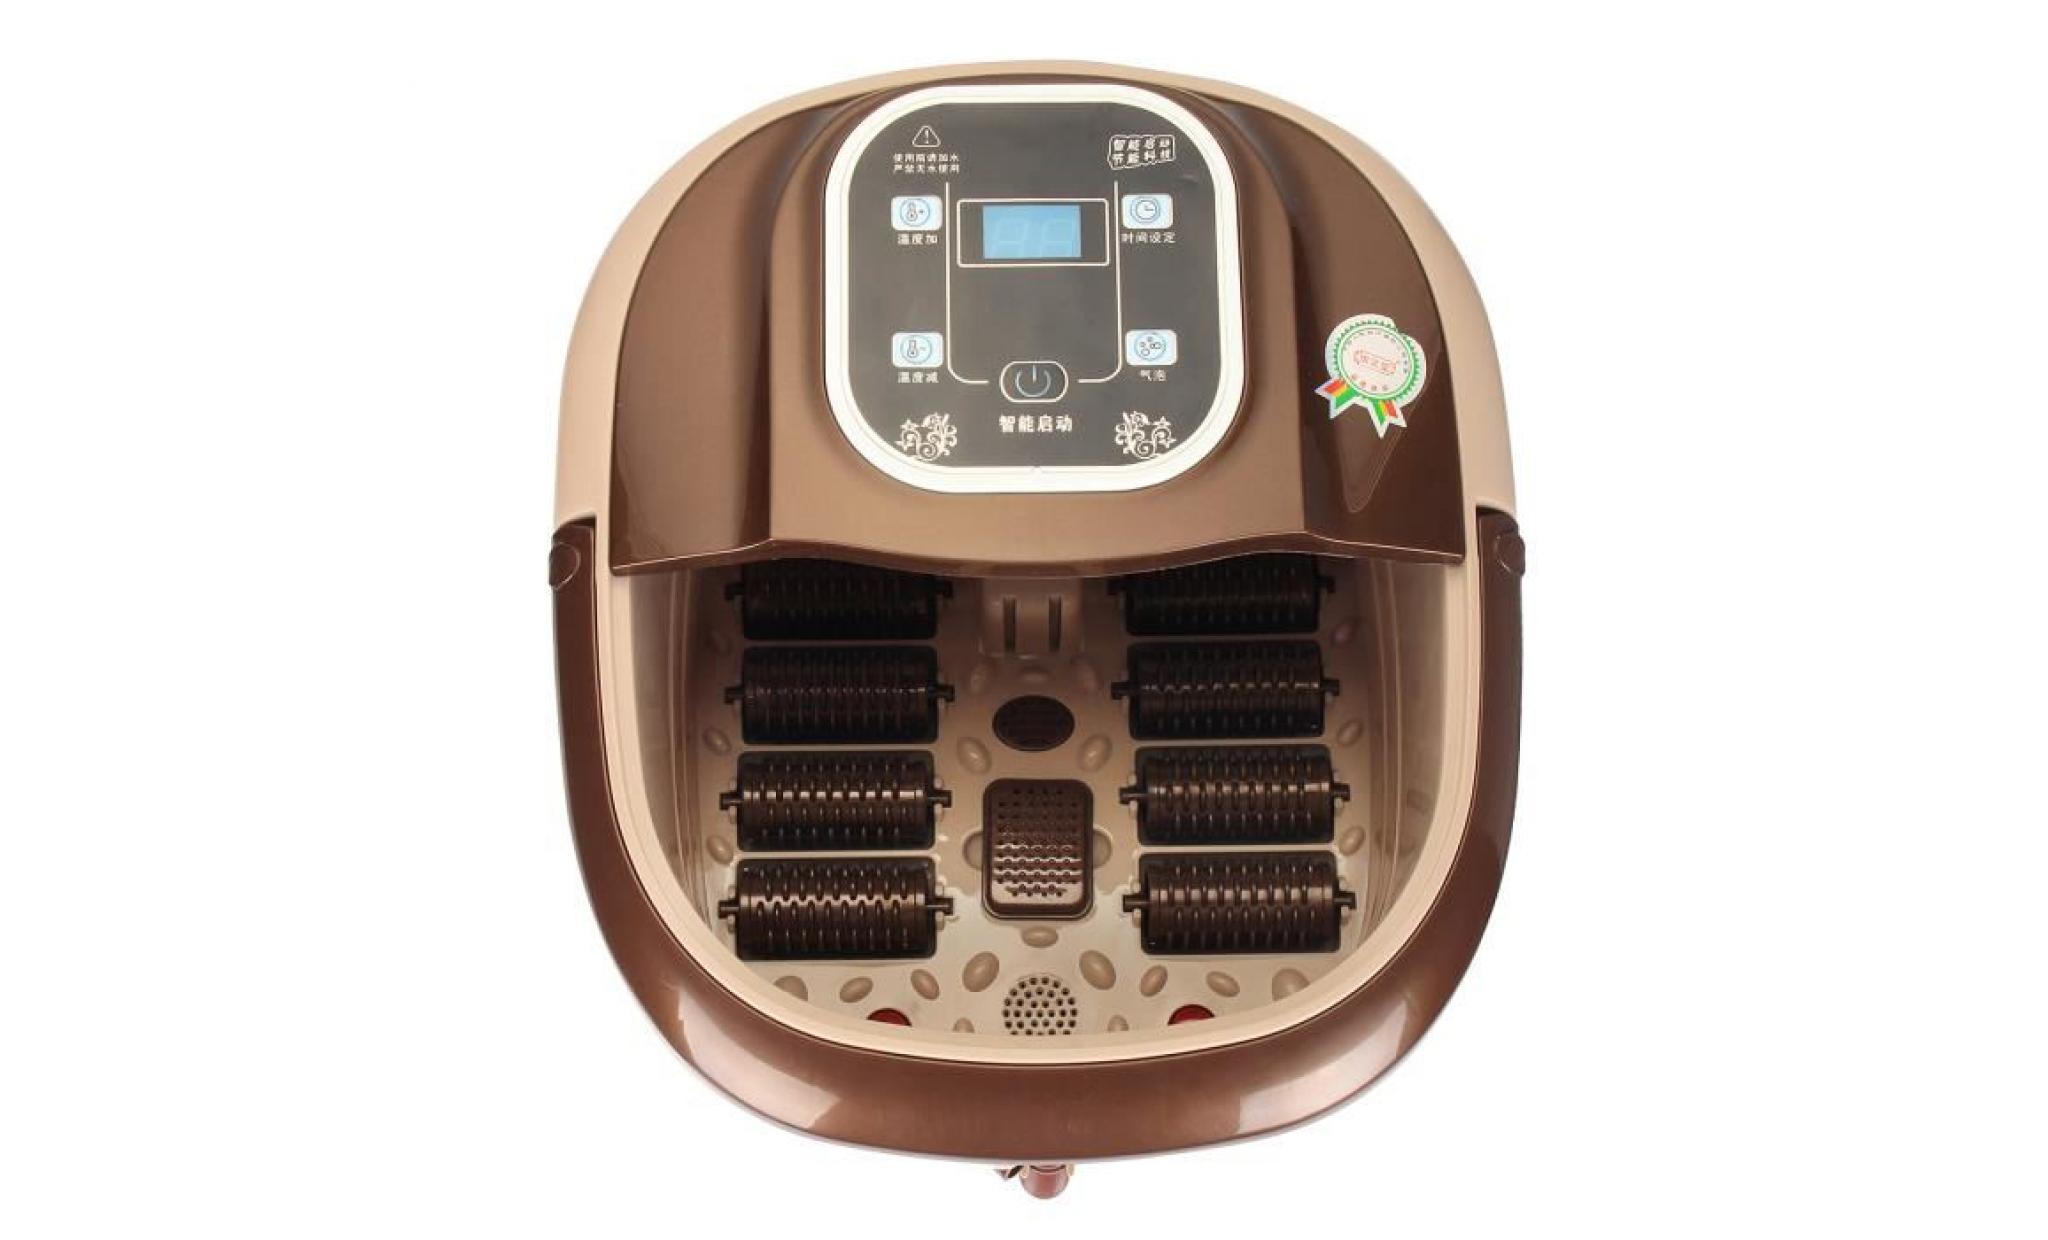 massage spa des pieds bain relaxant masseur chauffant 220v lcd digital smart